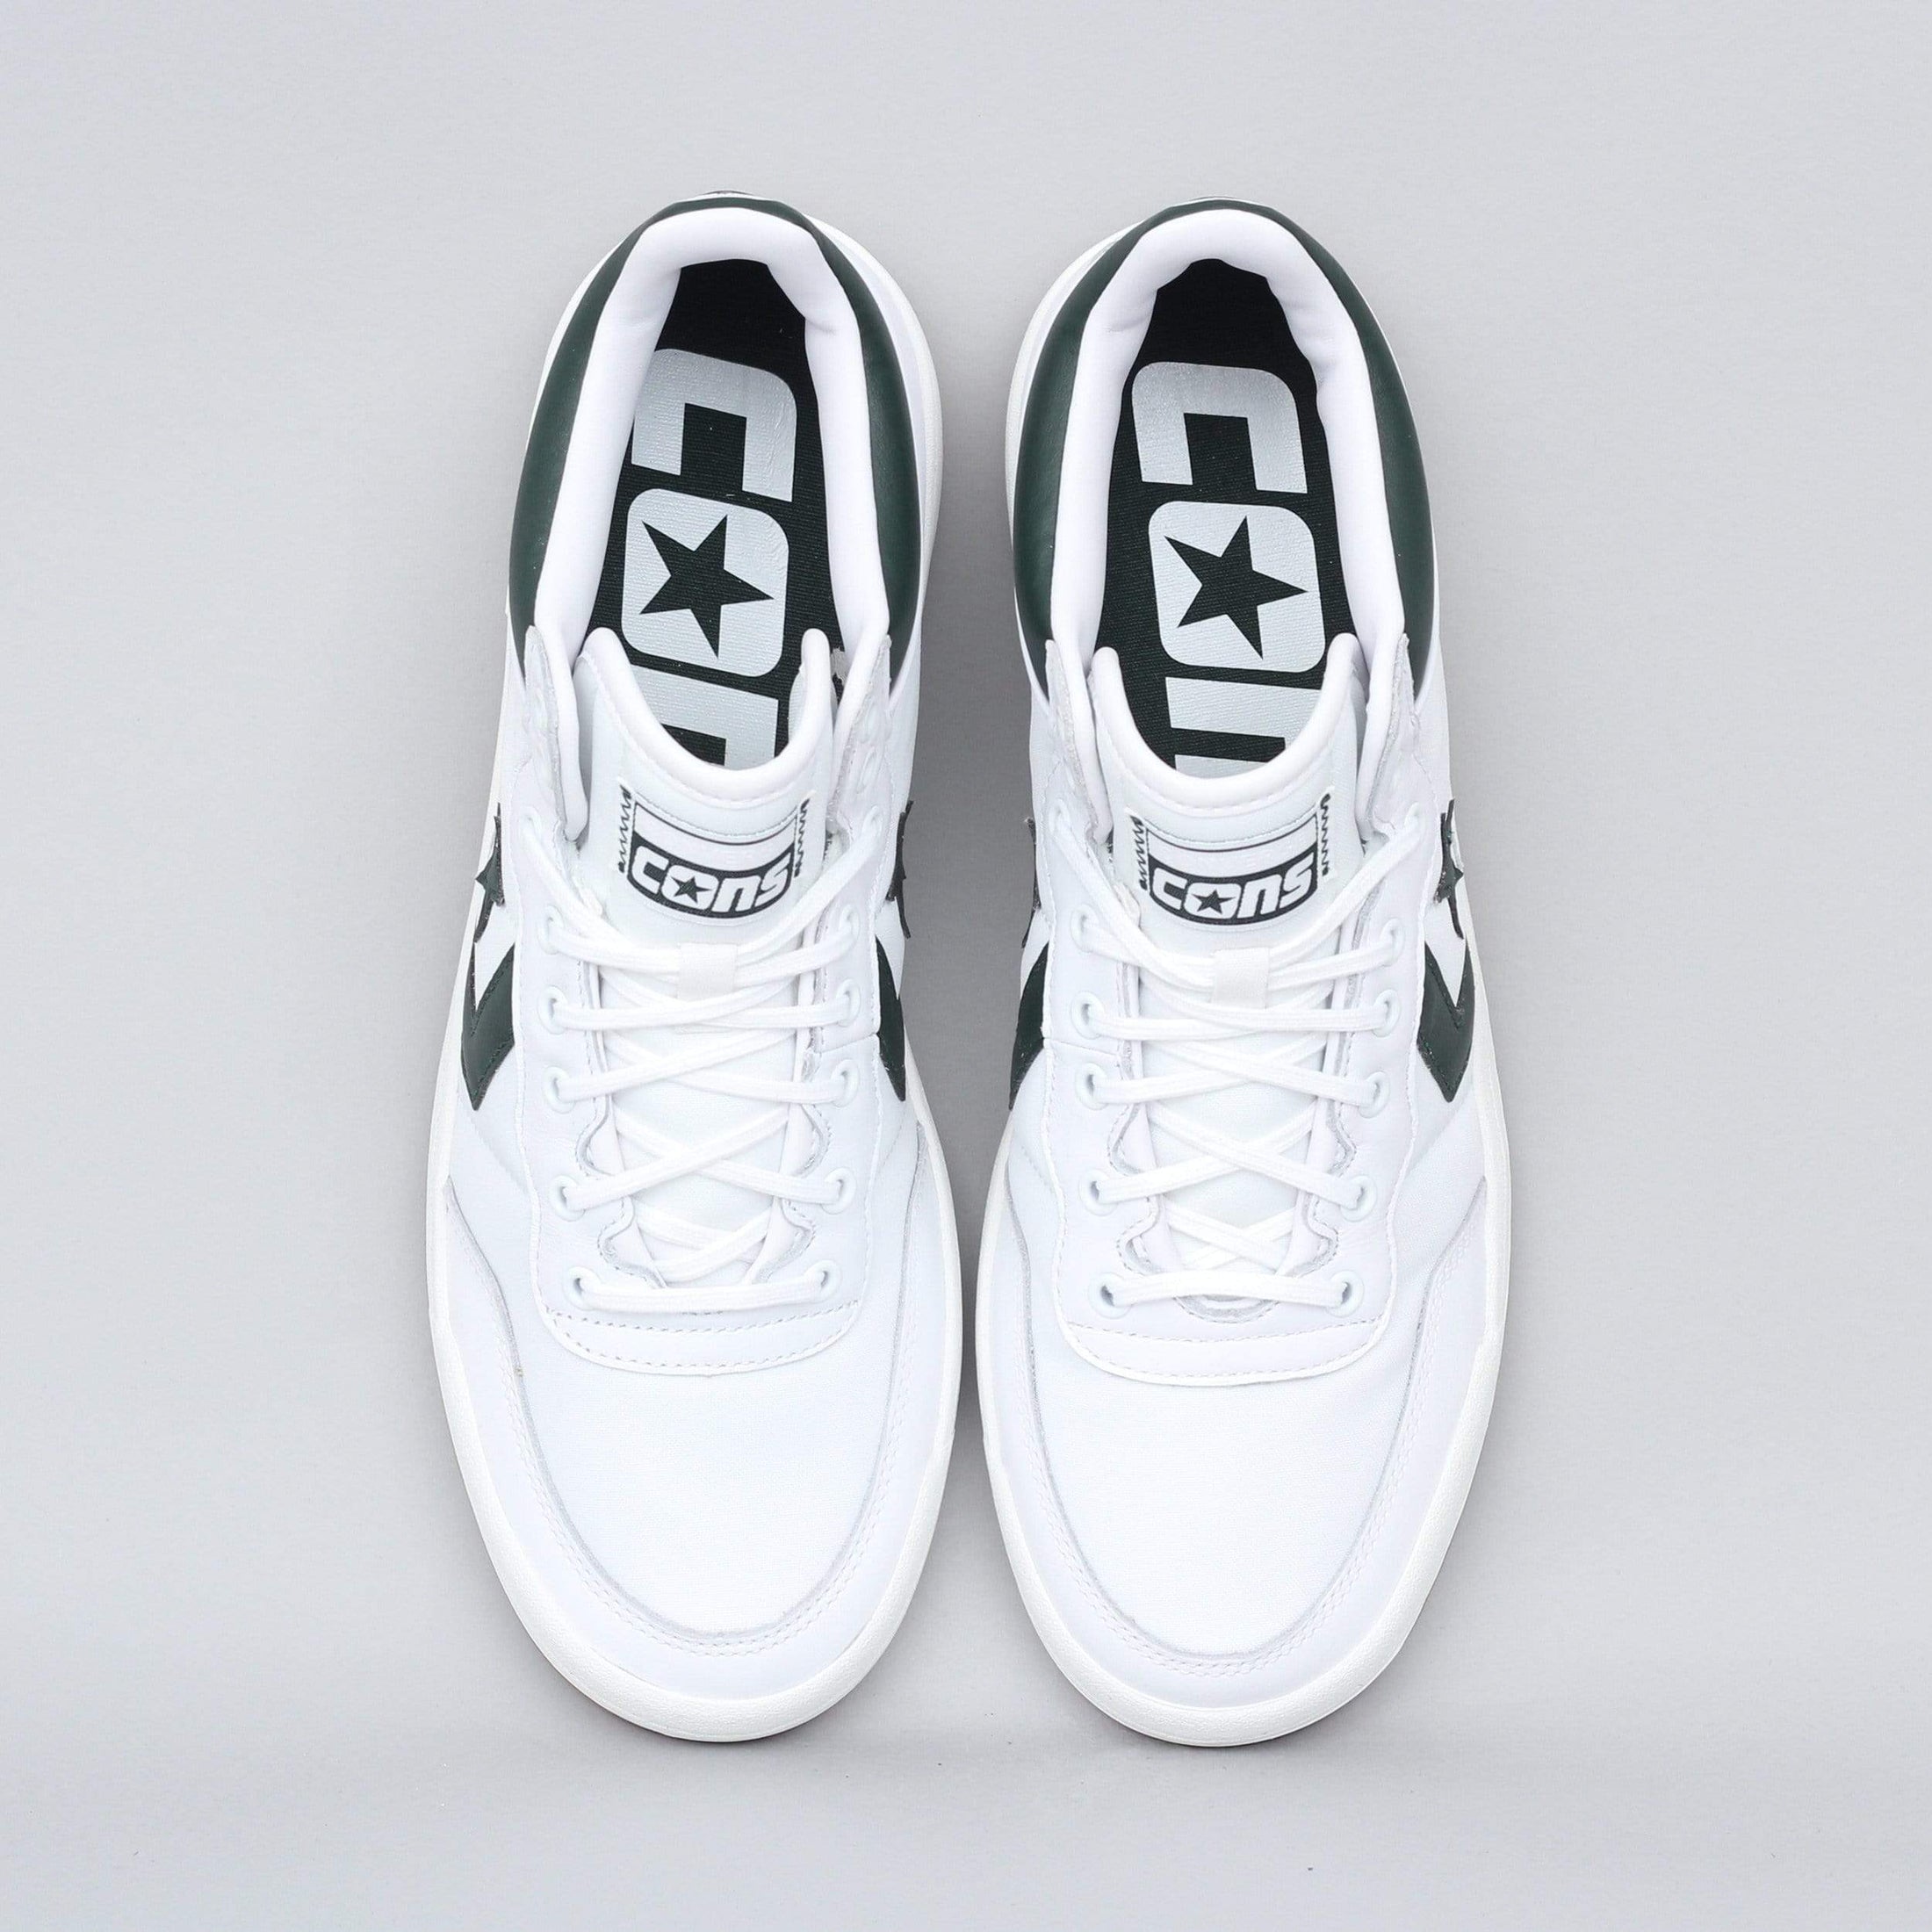 Converse Fastbreak Pro Mid Shoes White / Deep Emerald / Gum